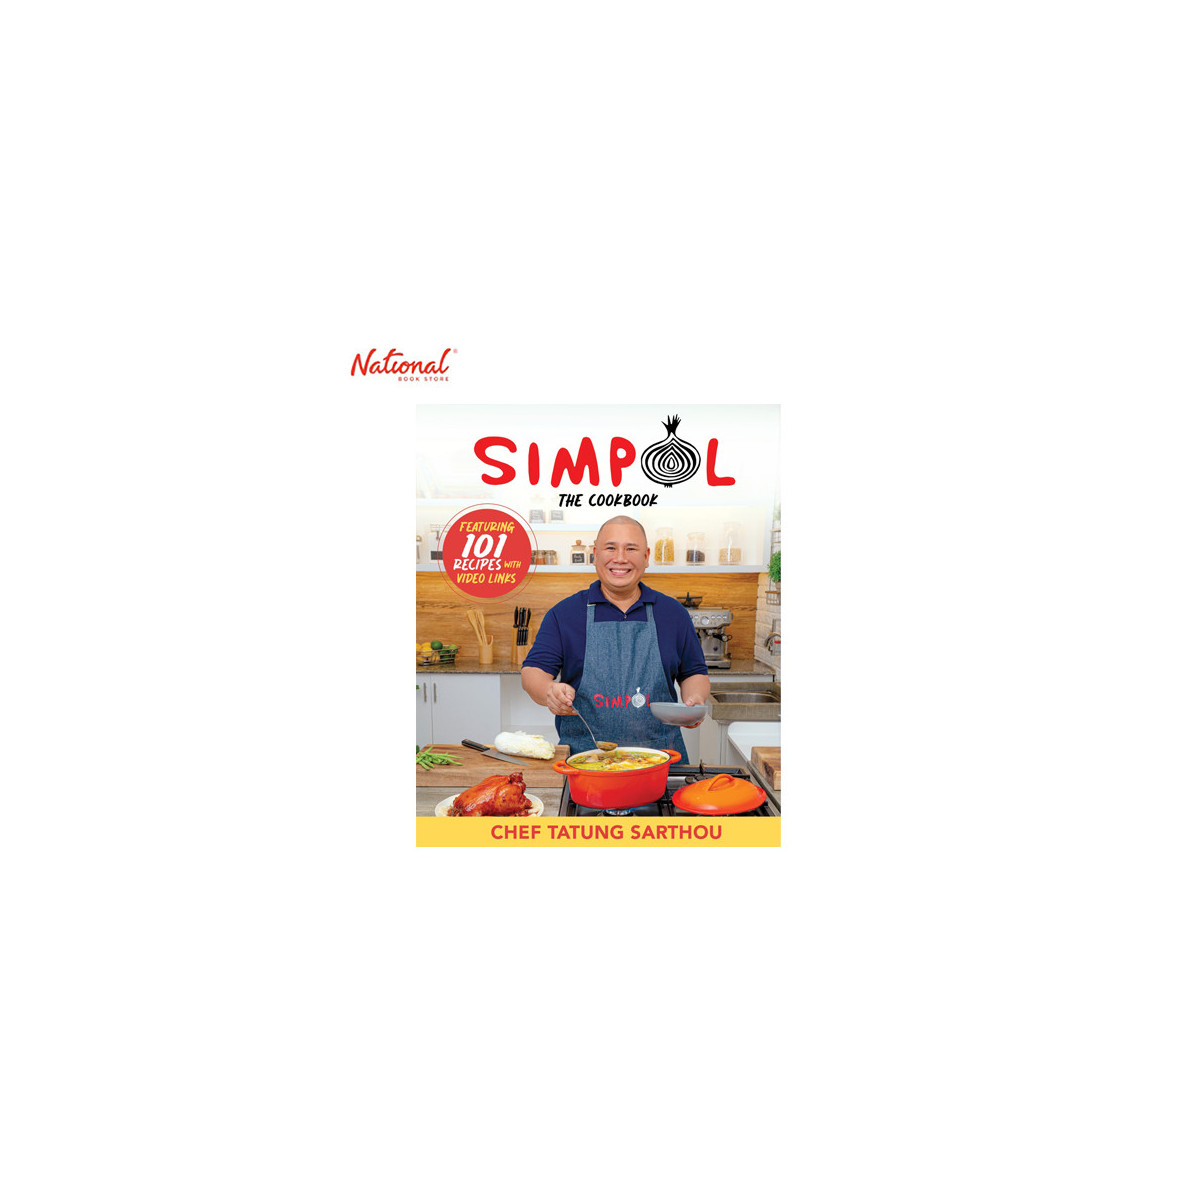 Simpol The Cookbook Trade Paperback by Chef Tatung Sarthou